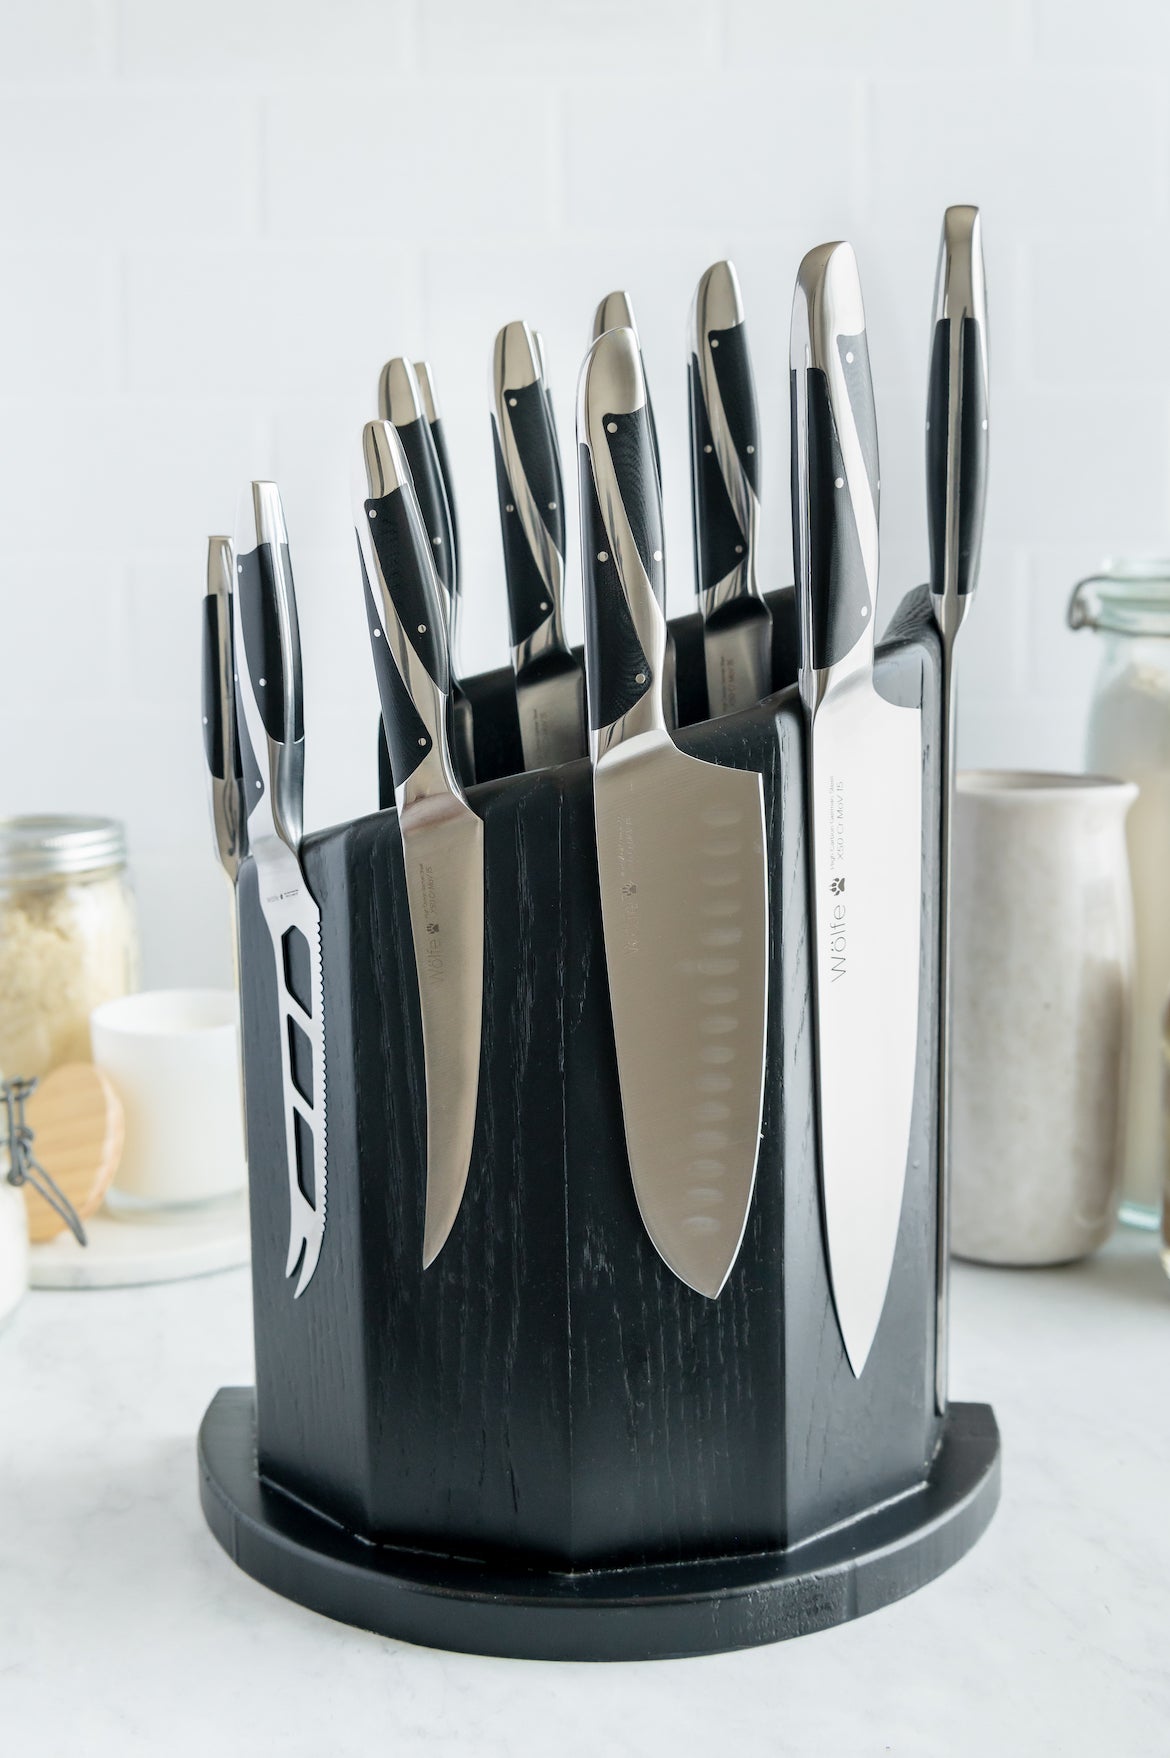  Global block-knife-sets, 1, Silver: Home & Kitchen